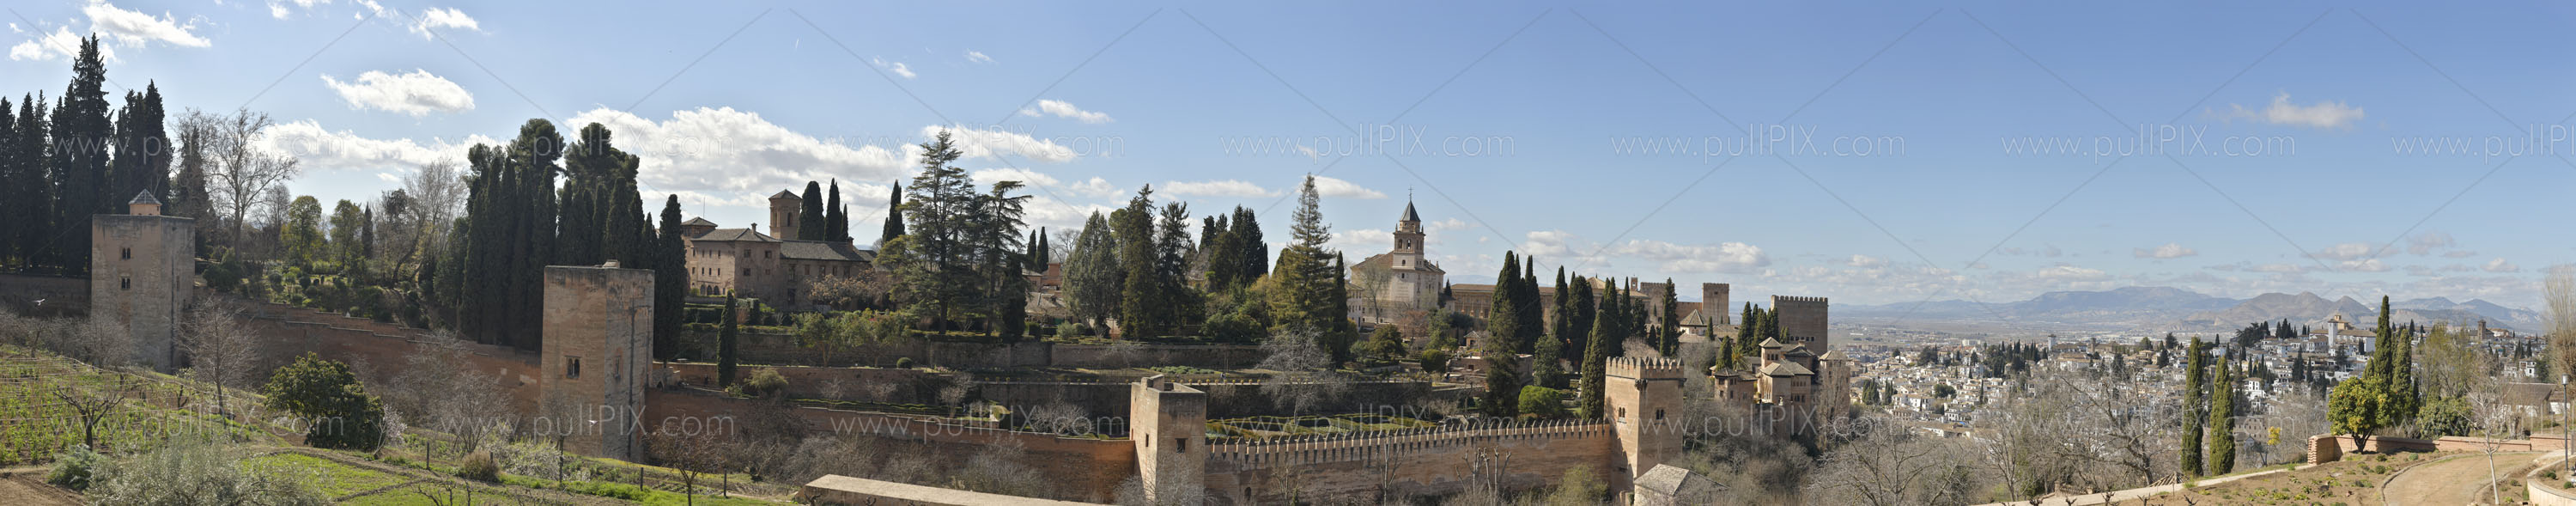 Preview Alhambra002.jpg